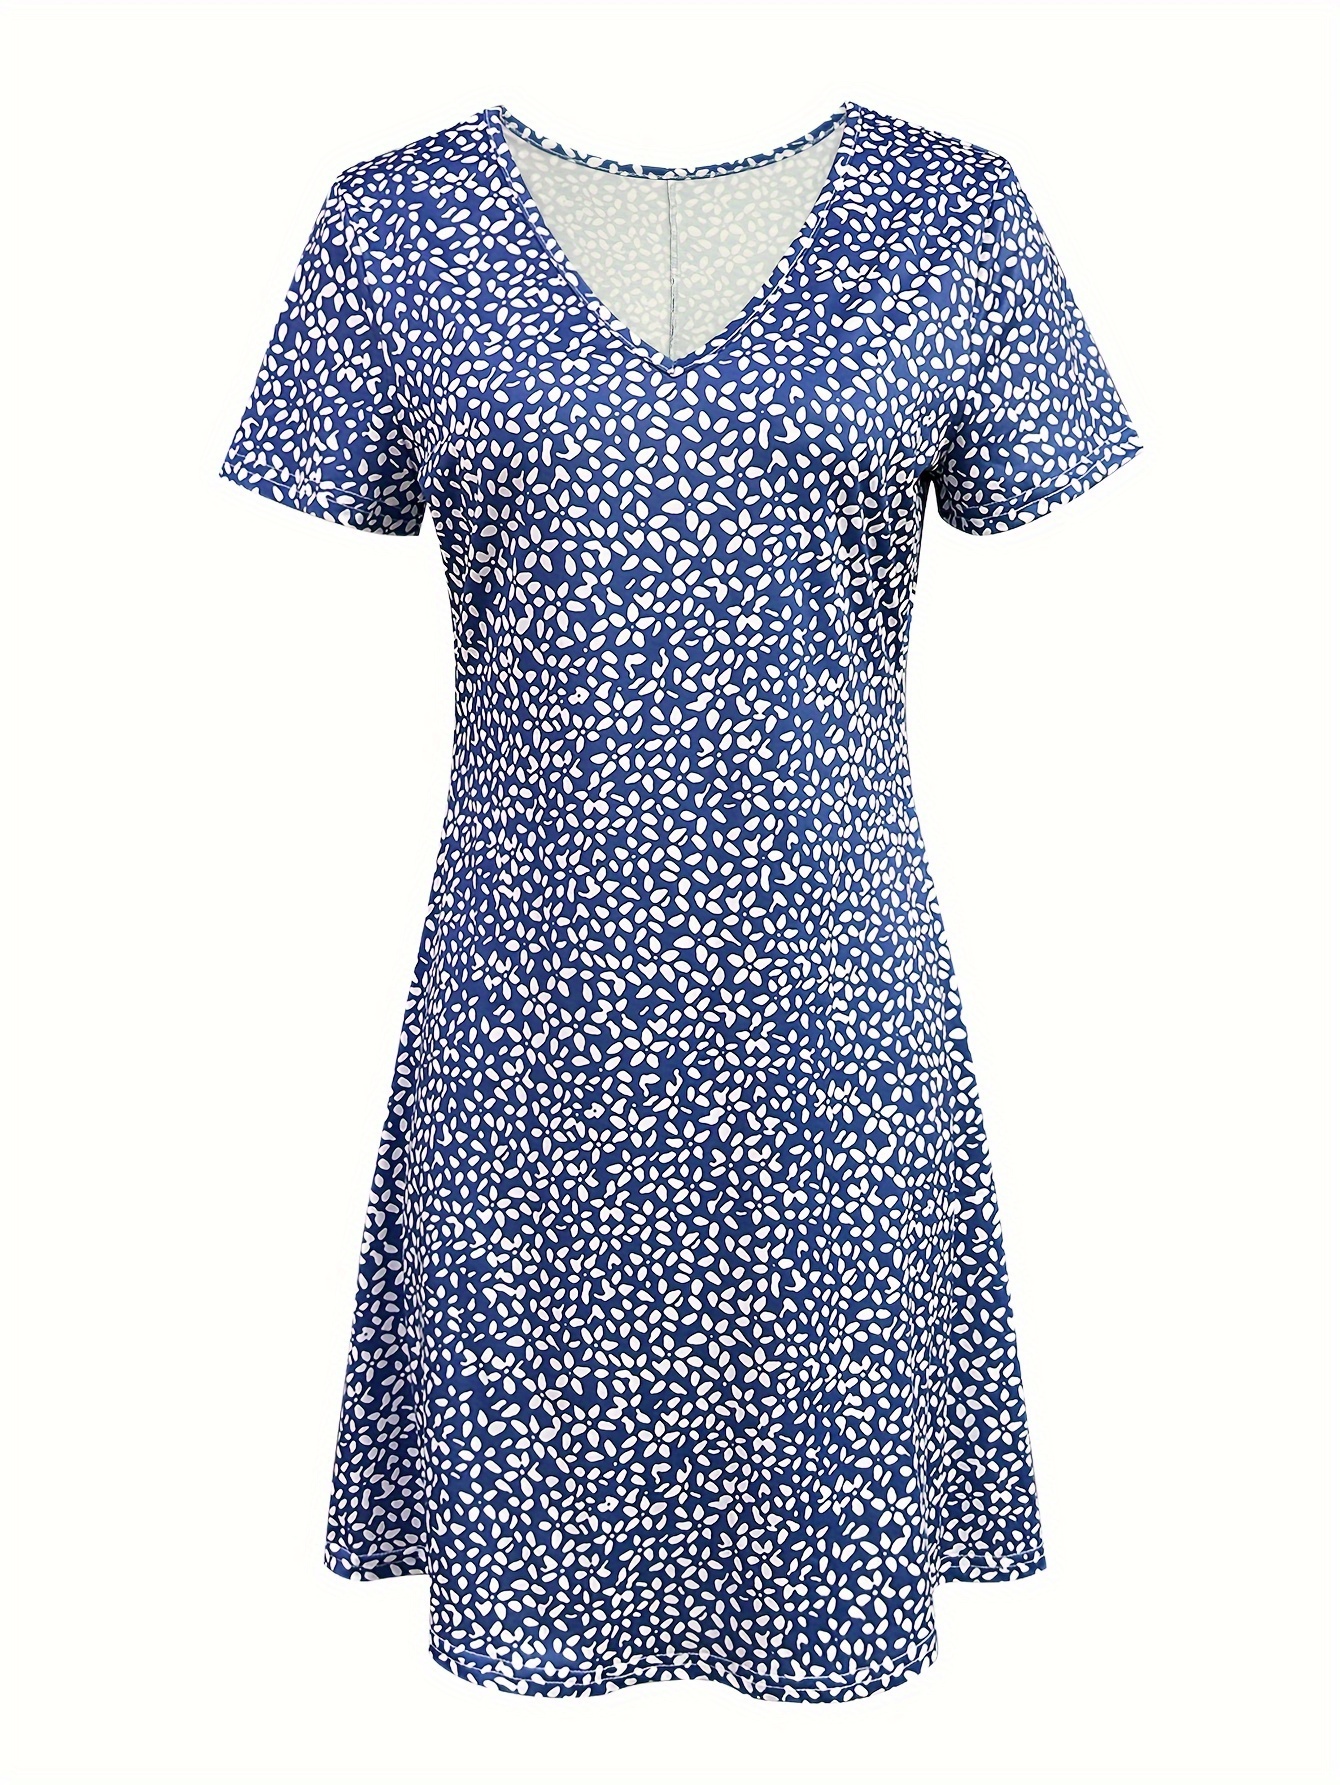 allover print v neck dress casual short sleeve dress for spring summer womens clothing